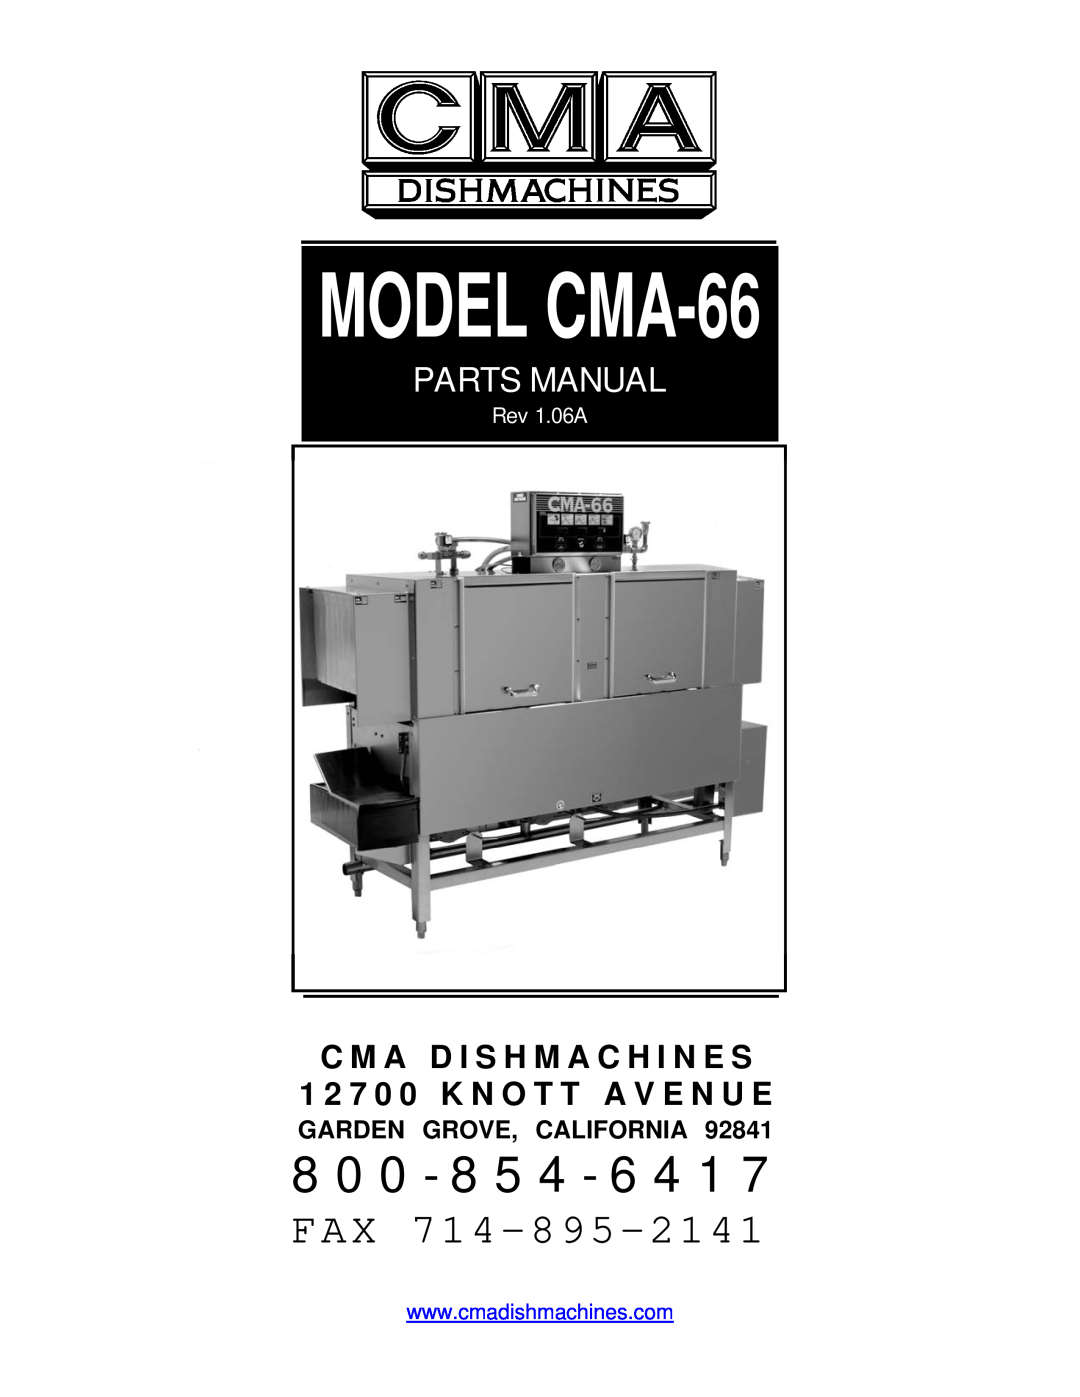 Black Box CMA DISHMACHINE manual C M A D I S H M A C H I N E S, 1 2 7 0 0 K N O T T A V E N U E, MODEL CMA-66, Rev 1.06A 